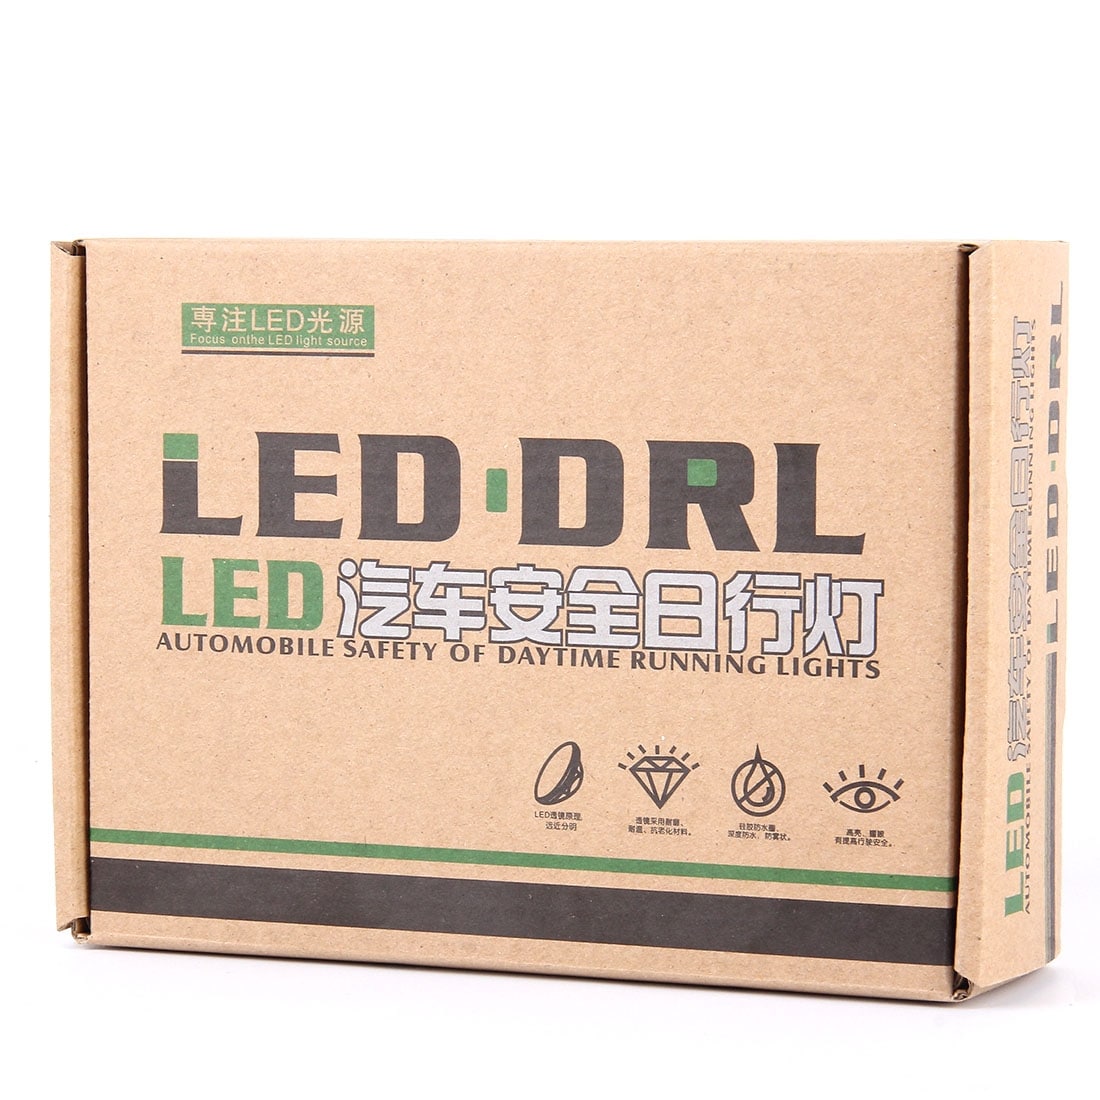 LED Varselys / ekstralys 15W 7000K - 2Pack